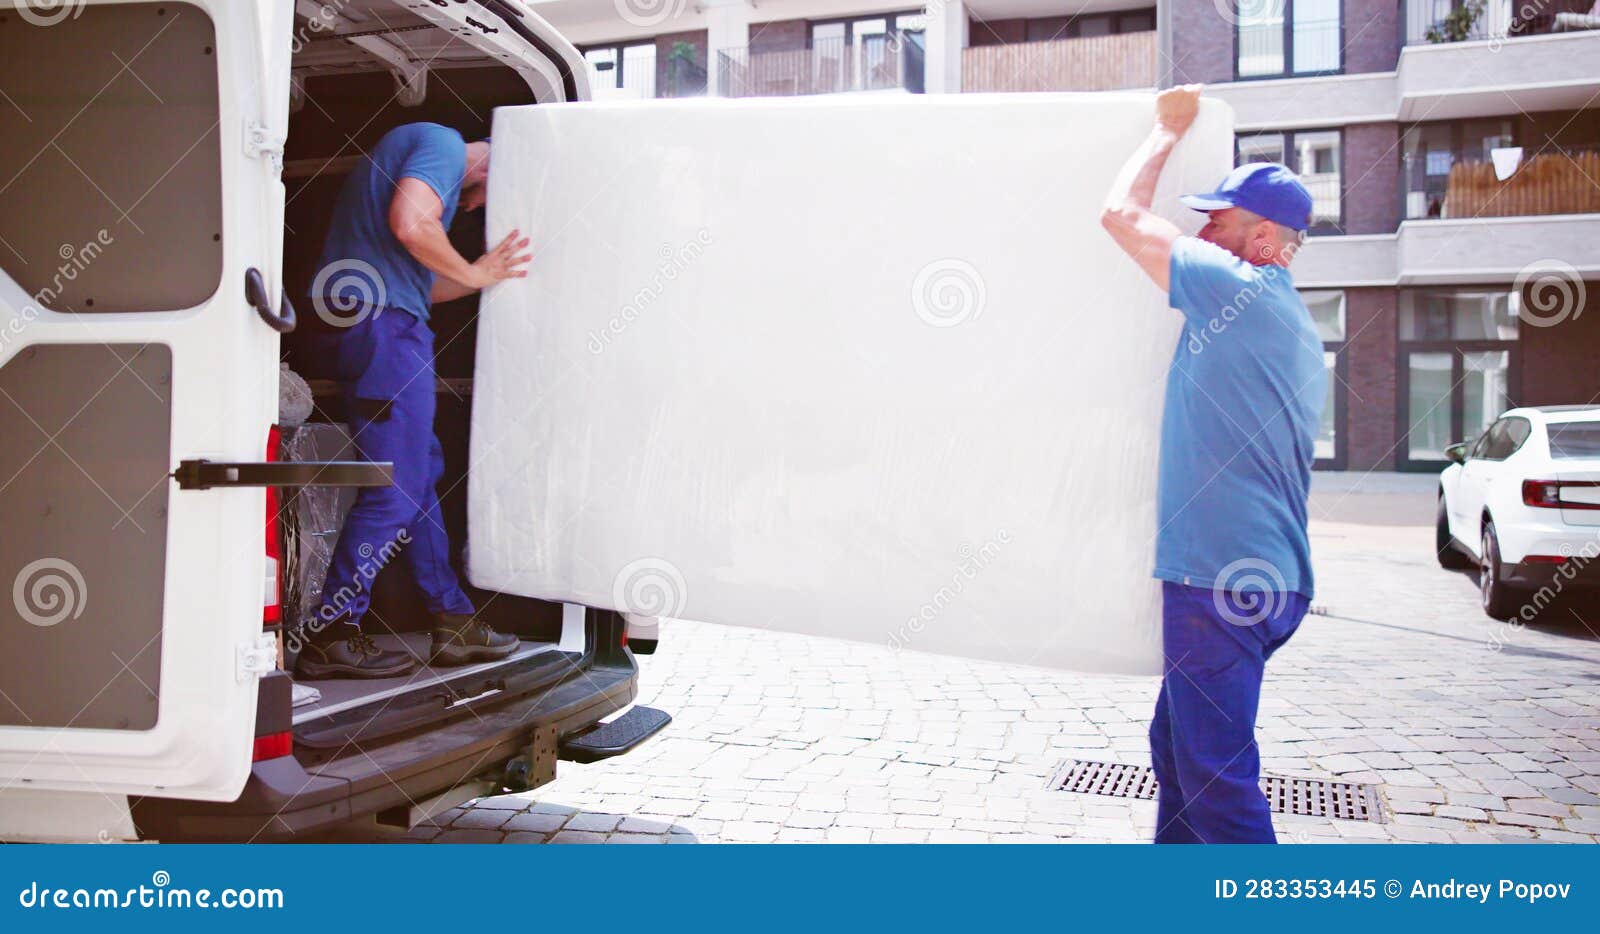 transporting mattress on top of car